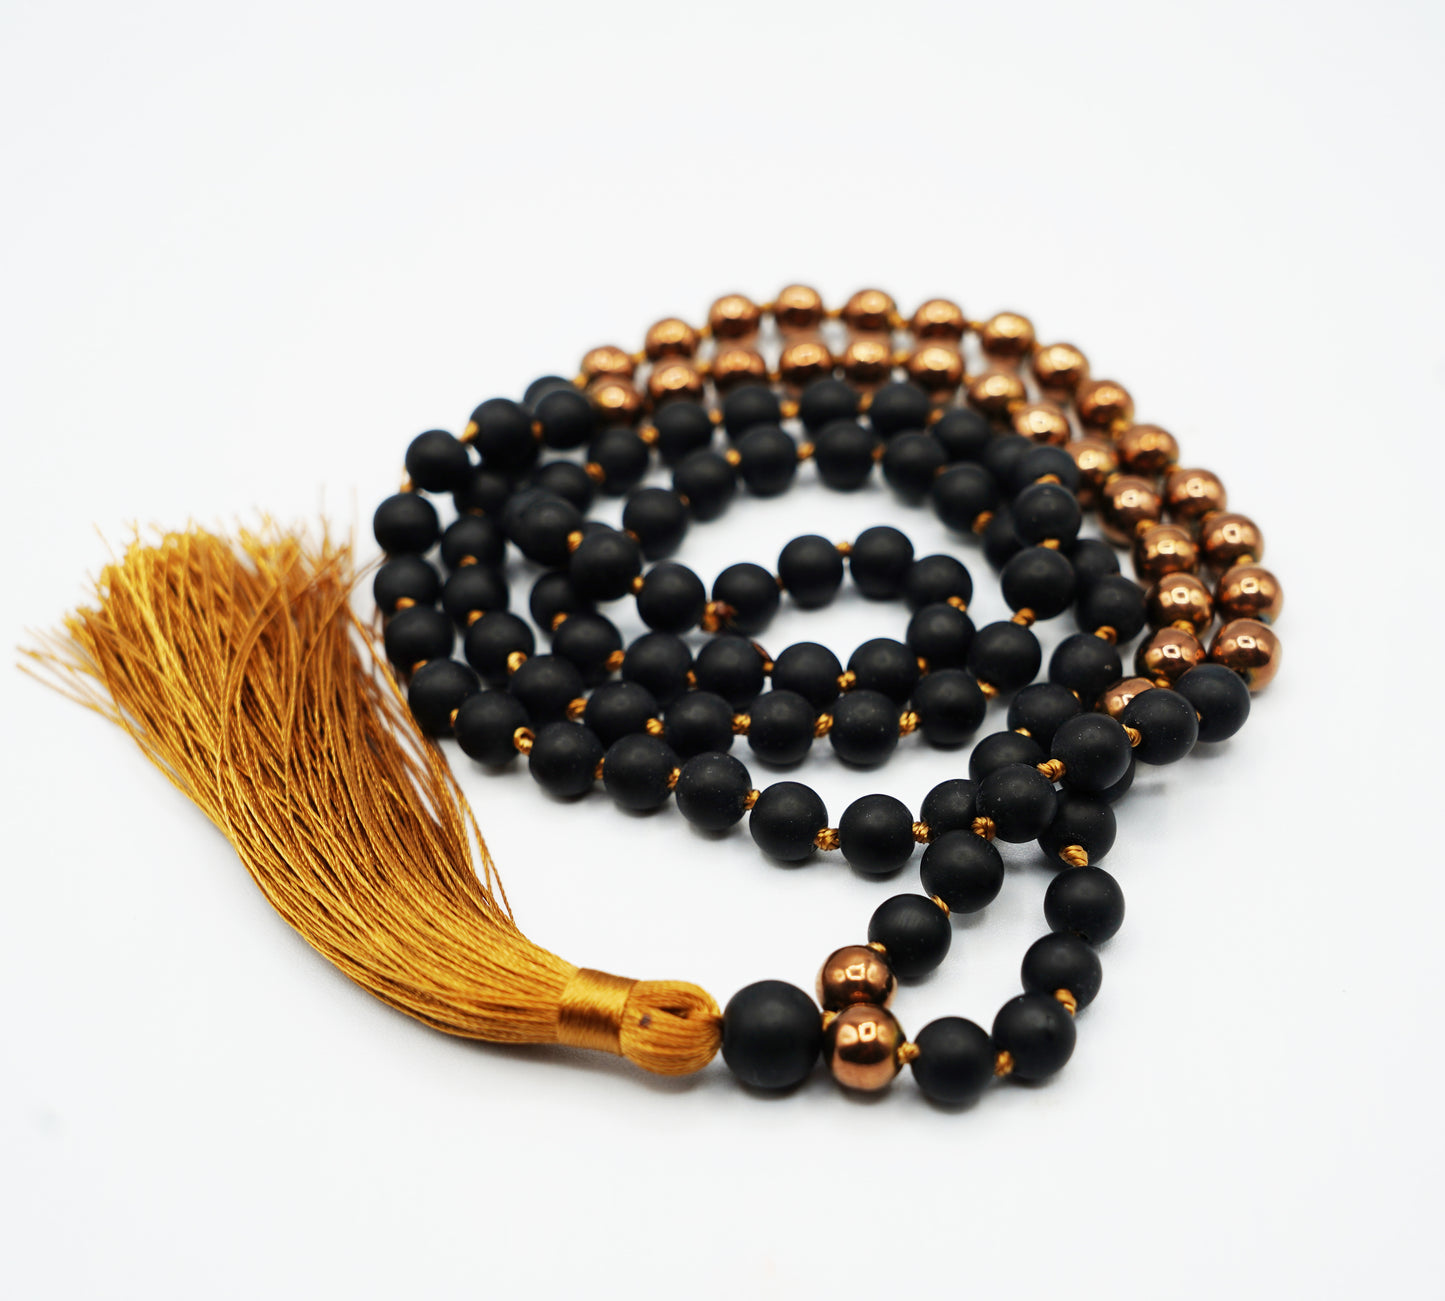 Erzulie's Powerful Energy - Mala DARK Goddess Intention Beads of Black Onyx and Gold Hematite